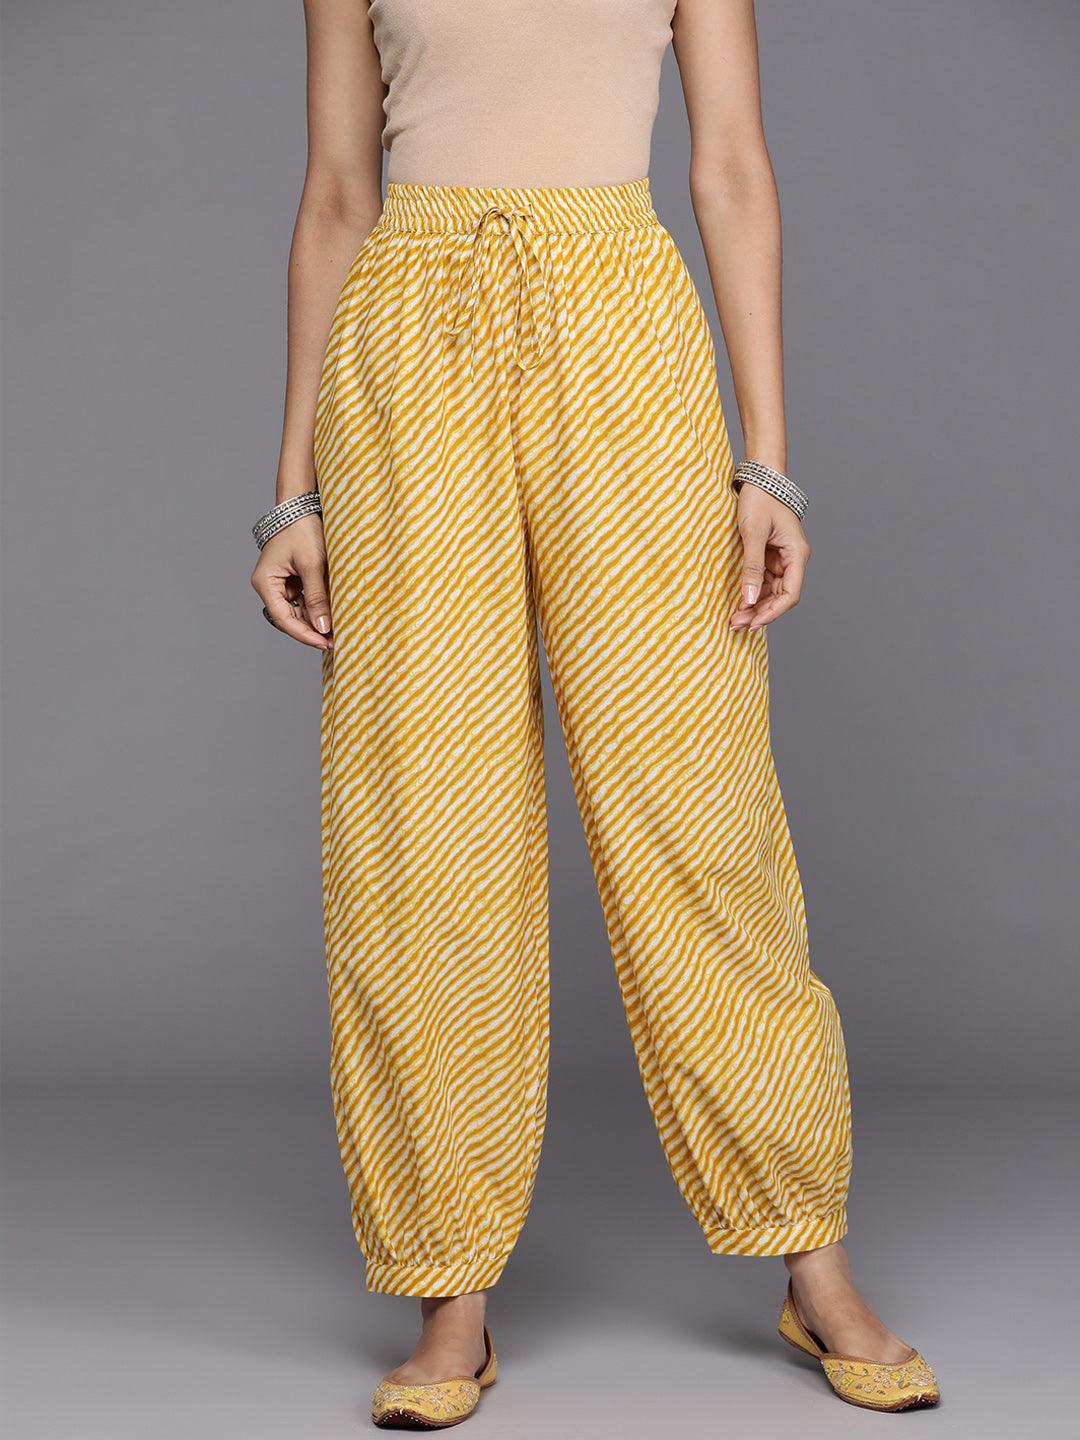 Yellow Printed Cotton Salwar Pants